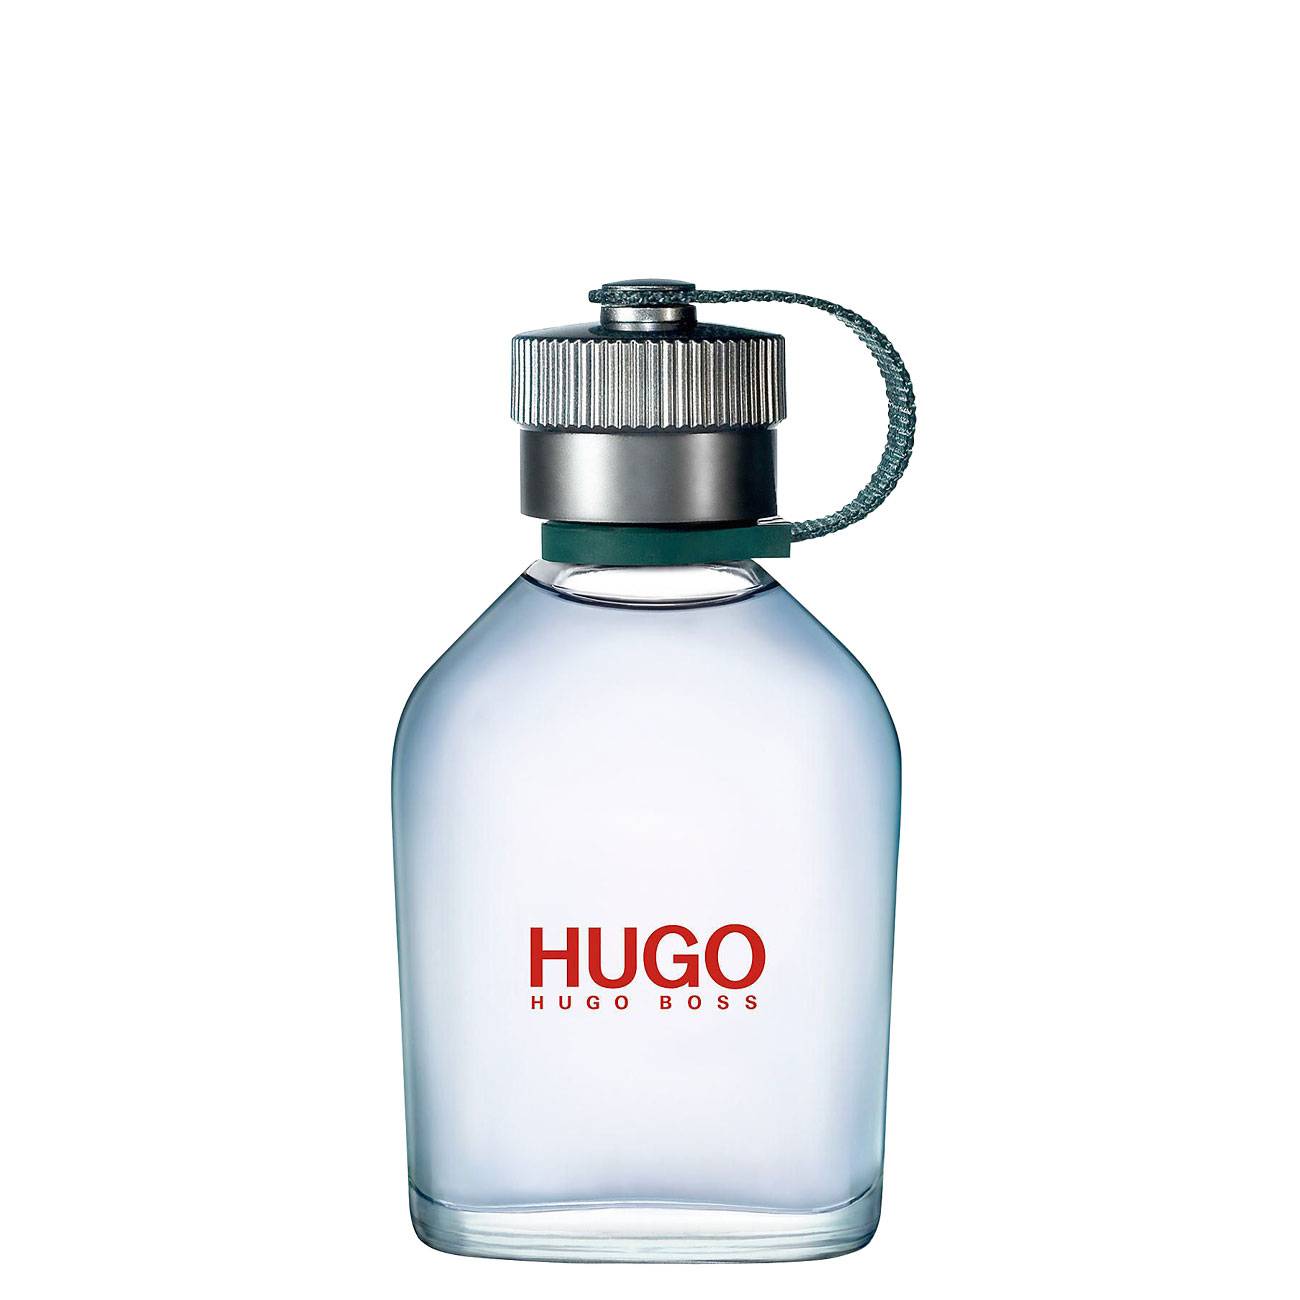 HUGO 75ml original Hugo Boss 75ml